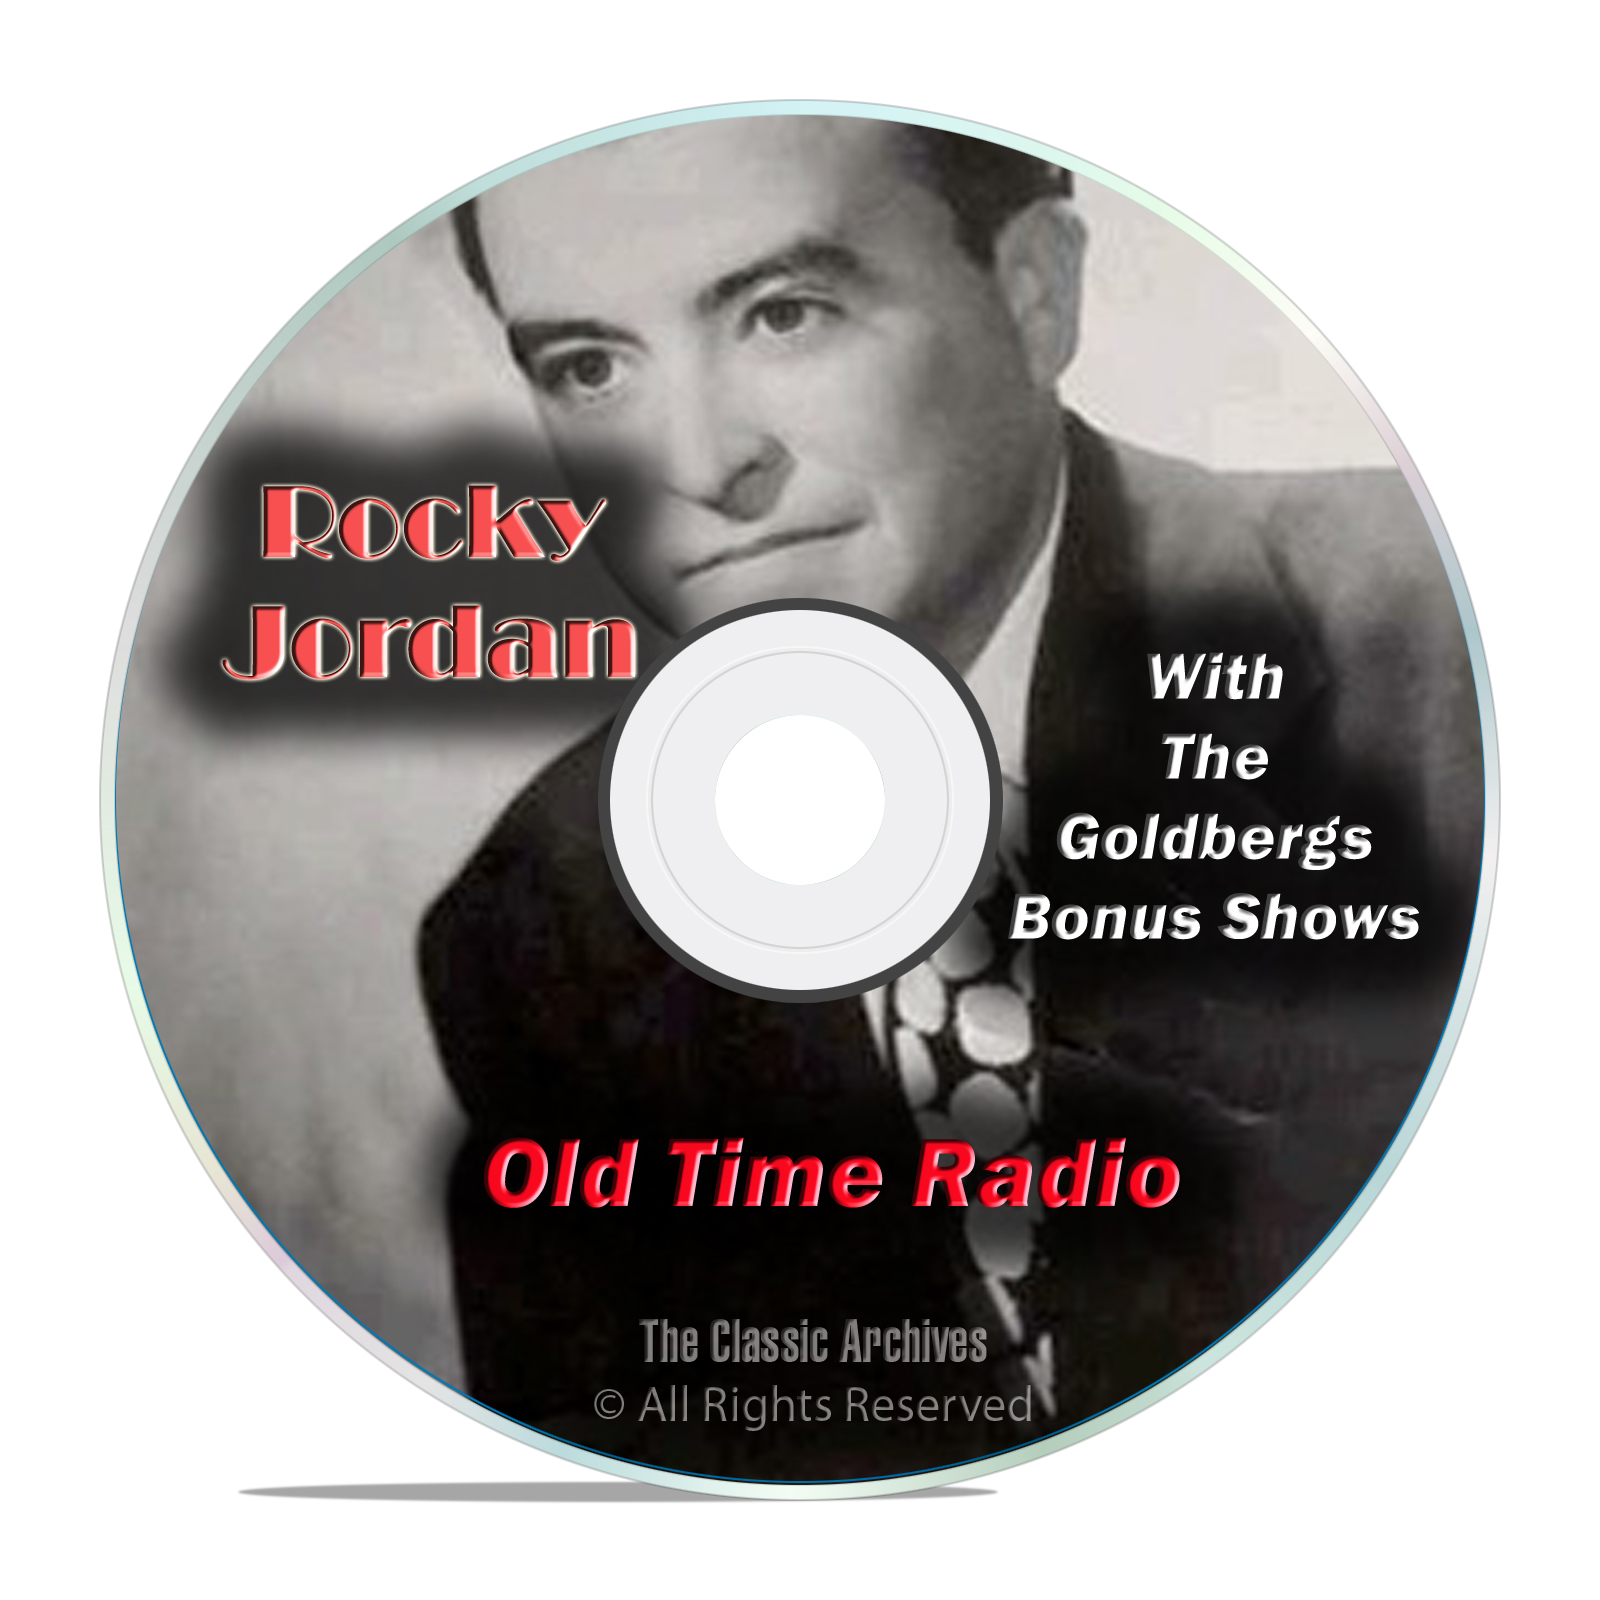 Rocky Jordan, 1,019 Old Time Radio Shows, with bonus "The Goldbergs" OTR